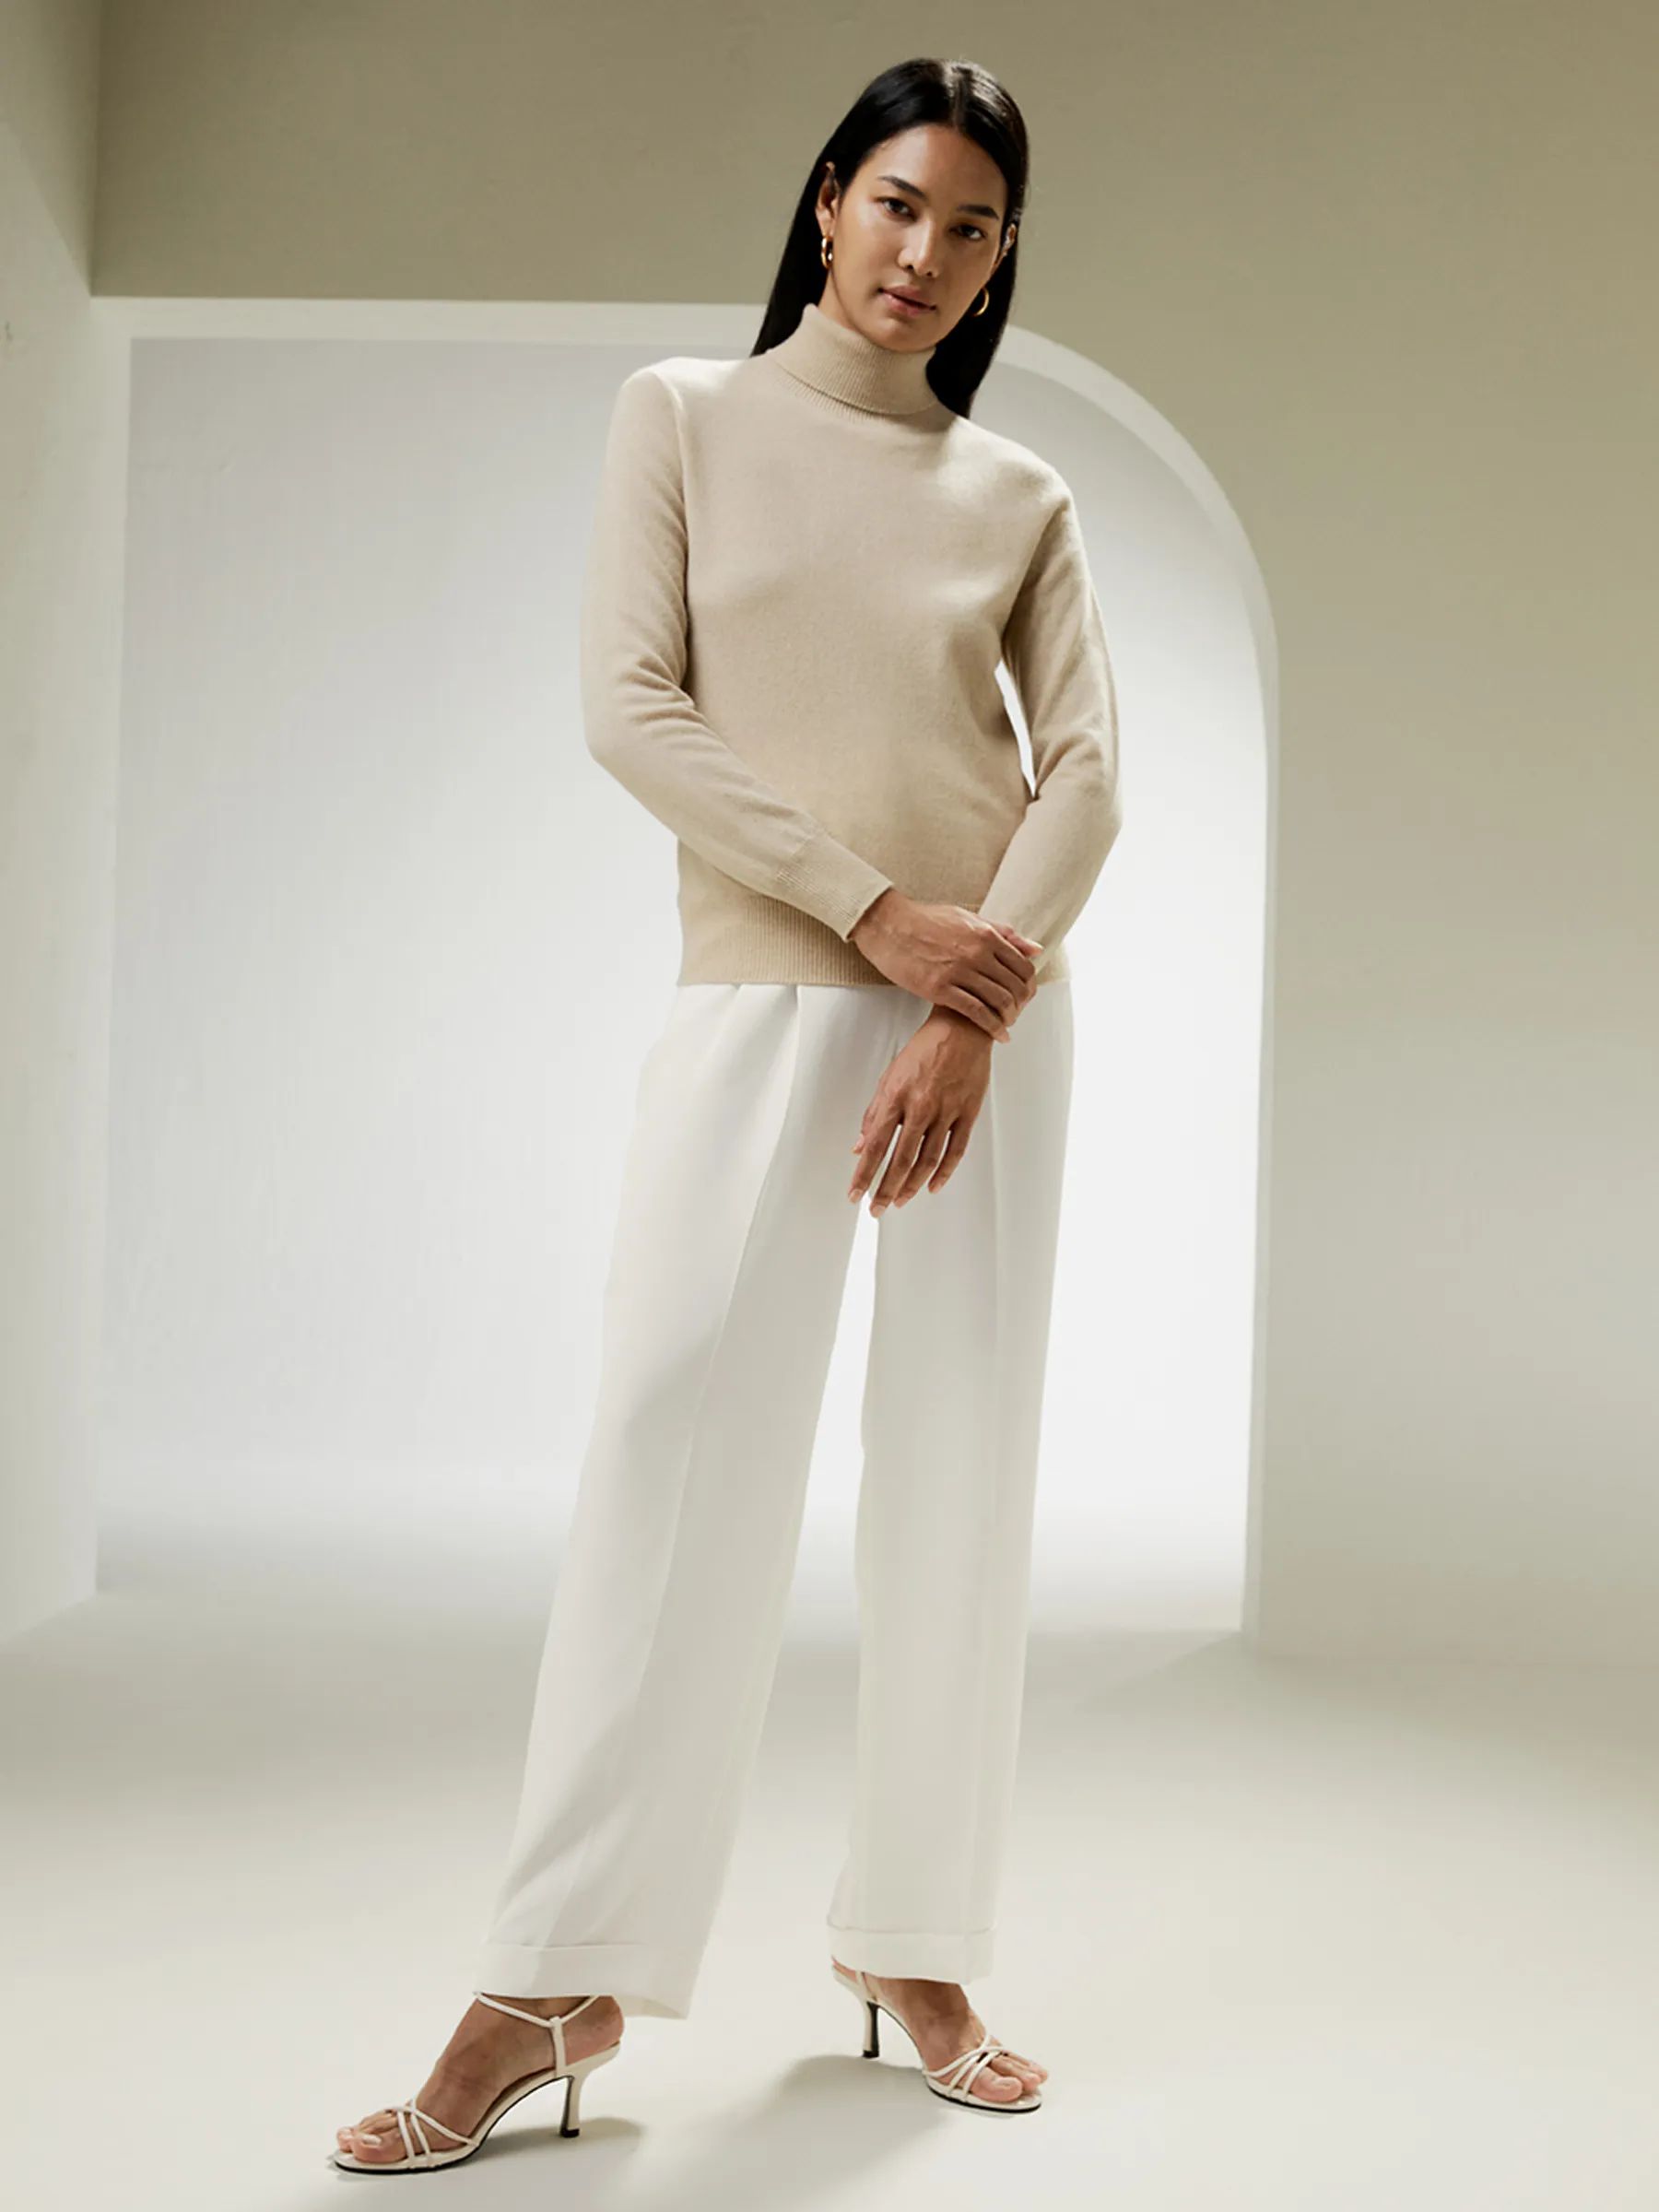 Pure Cashmere Turtleneck Sweater For Women | LilySilk